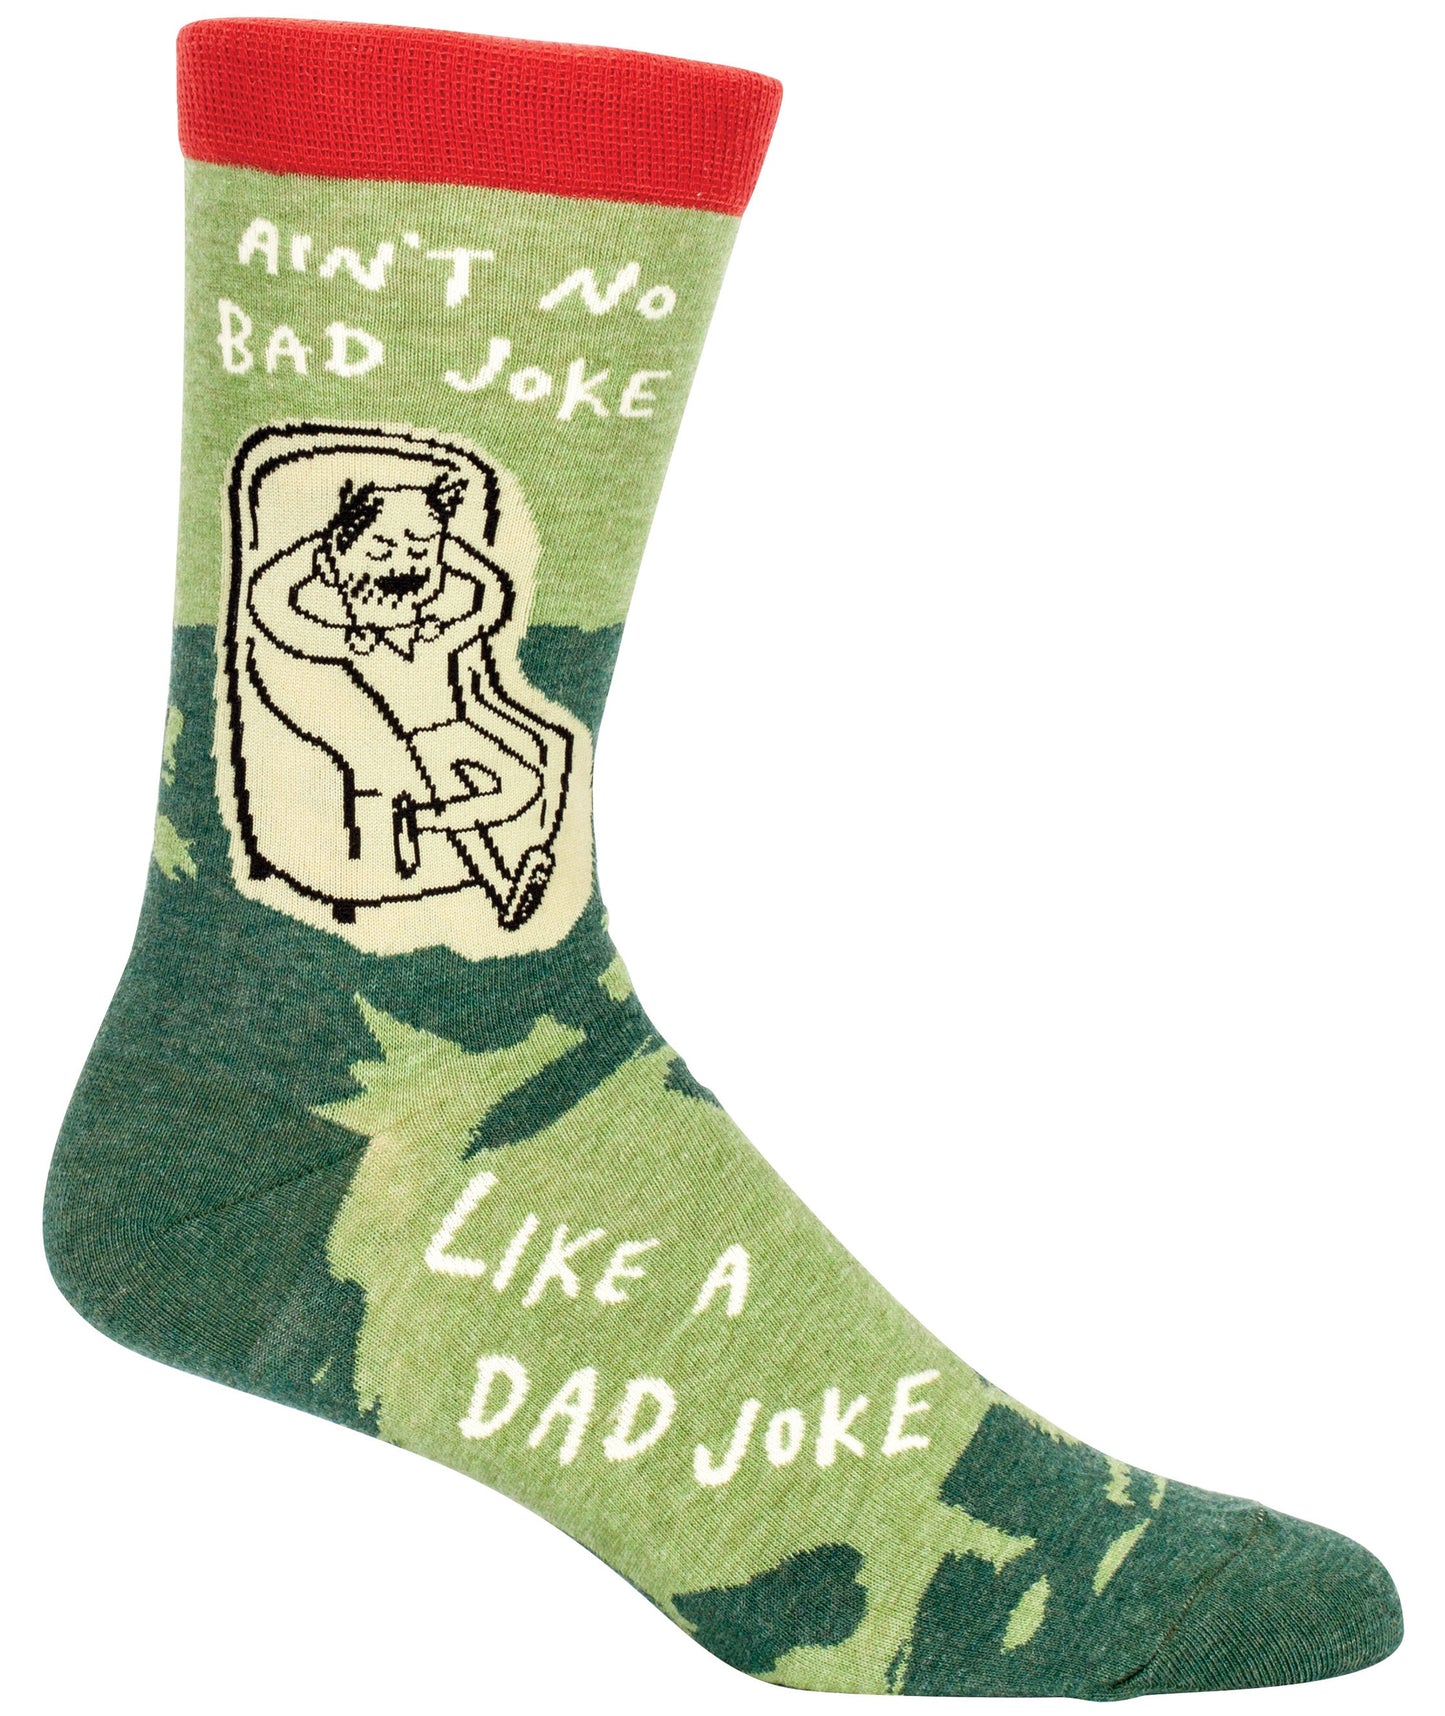 Blue Q - Men's Crew Socks - Dad Joke